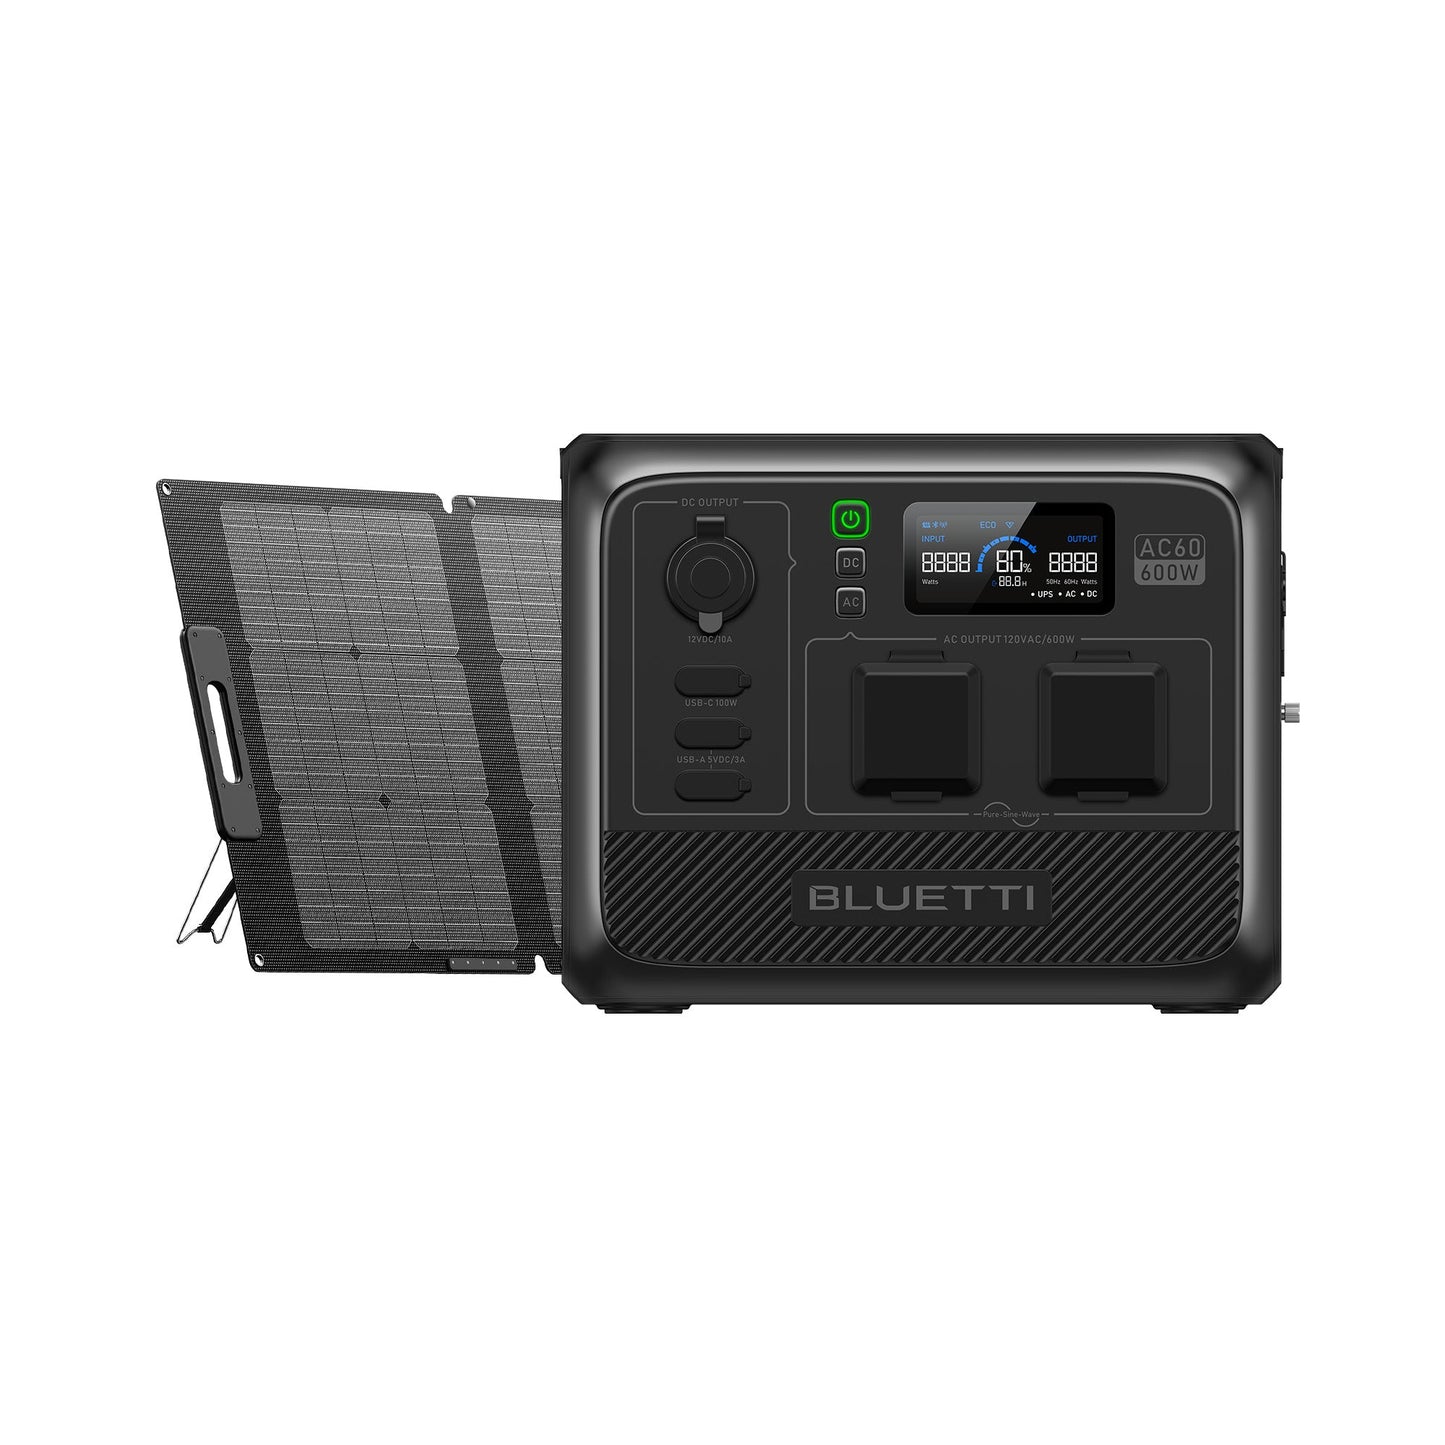 BLUETTI AC60 Portable Power Station | 600W 403Wh